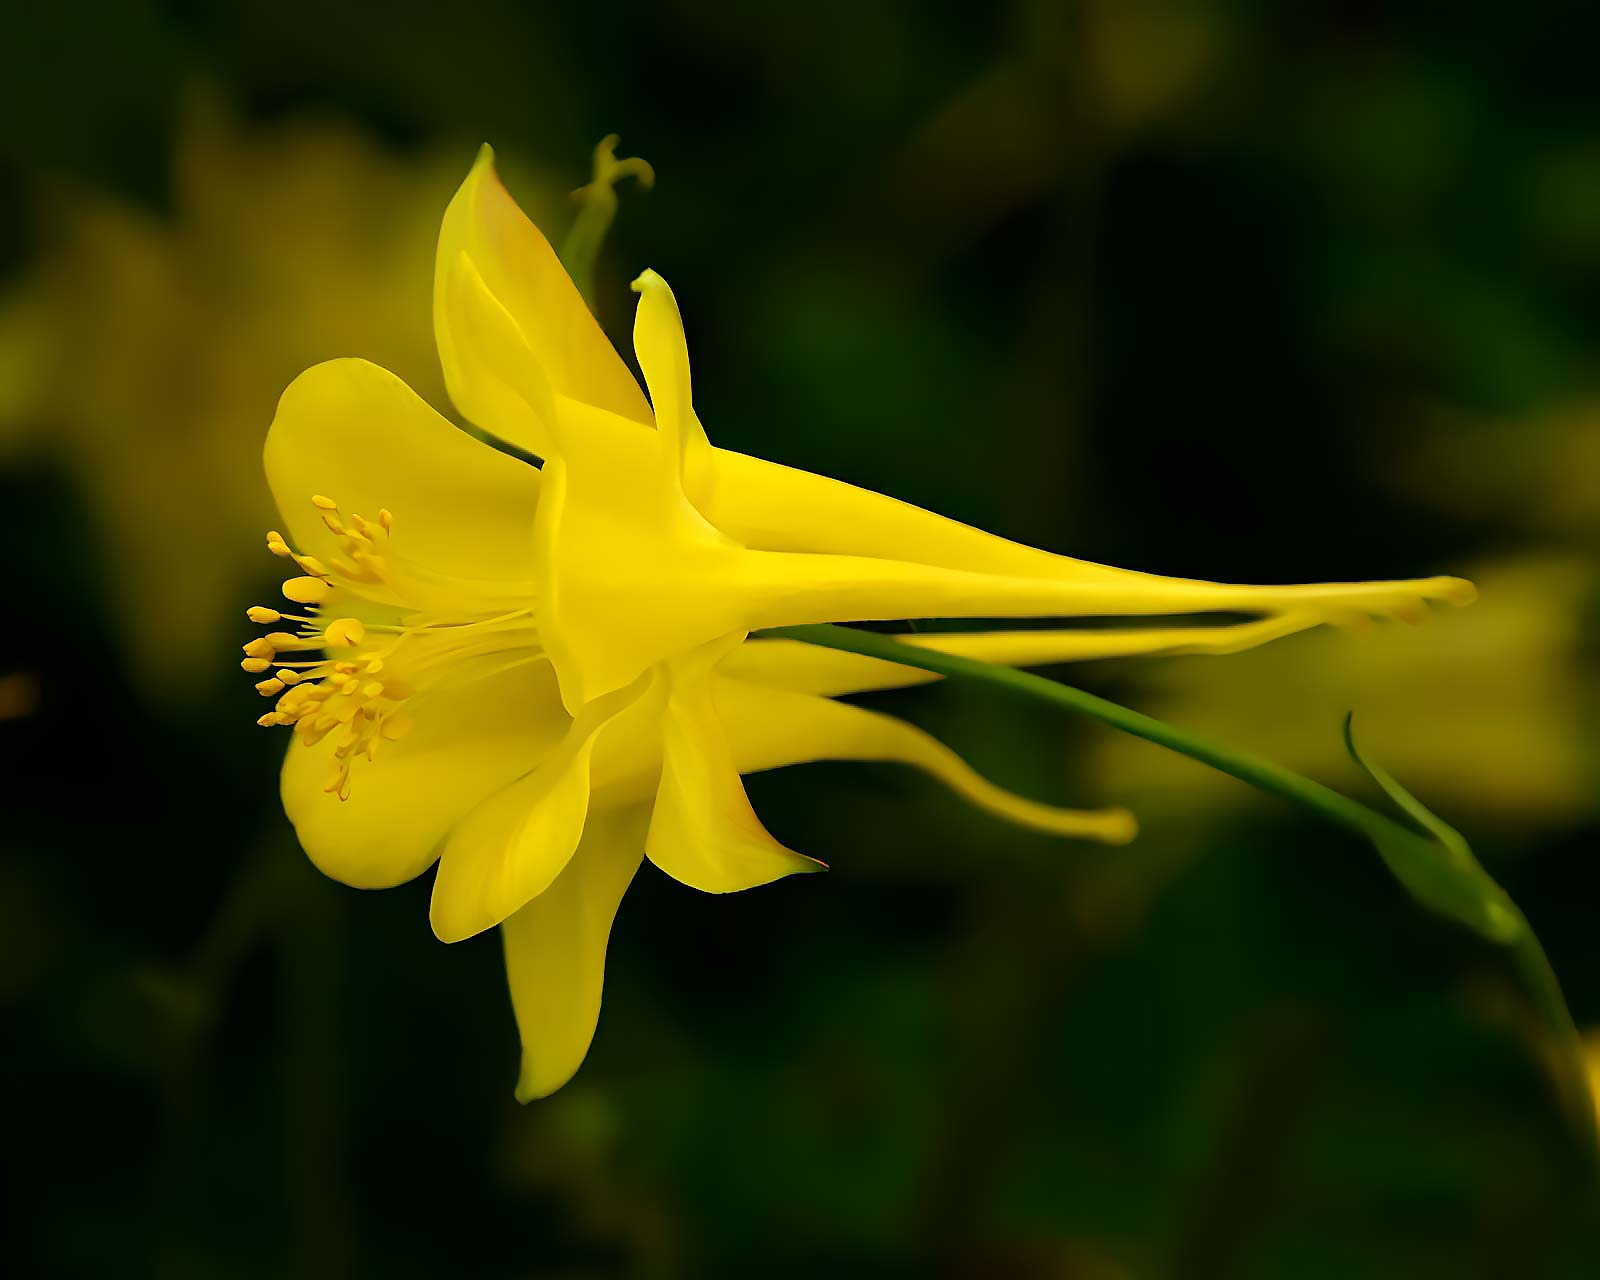 The yellow flower of Aquilegia chrysantha